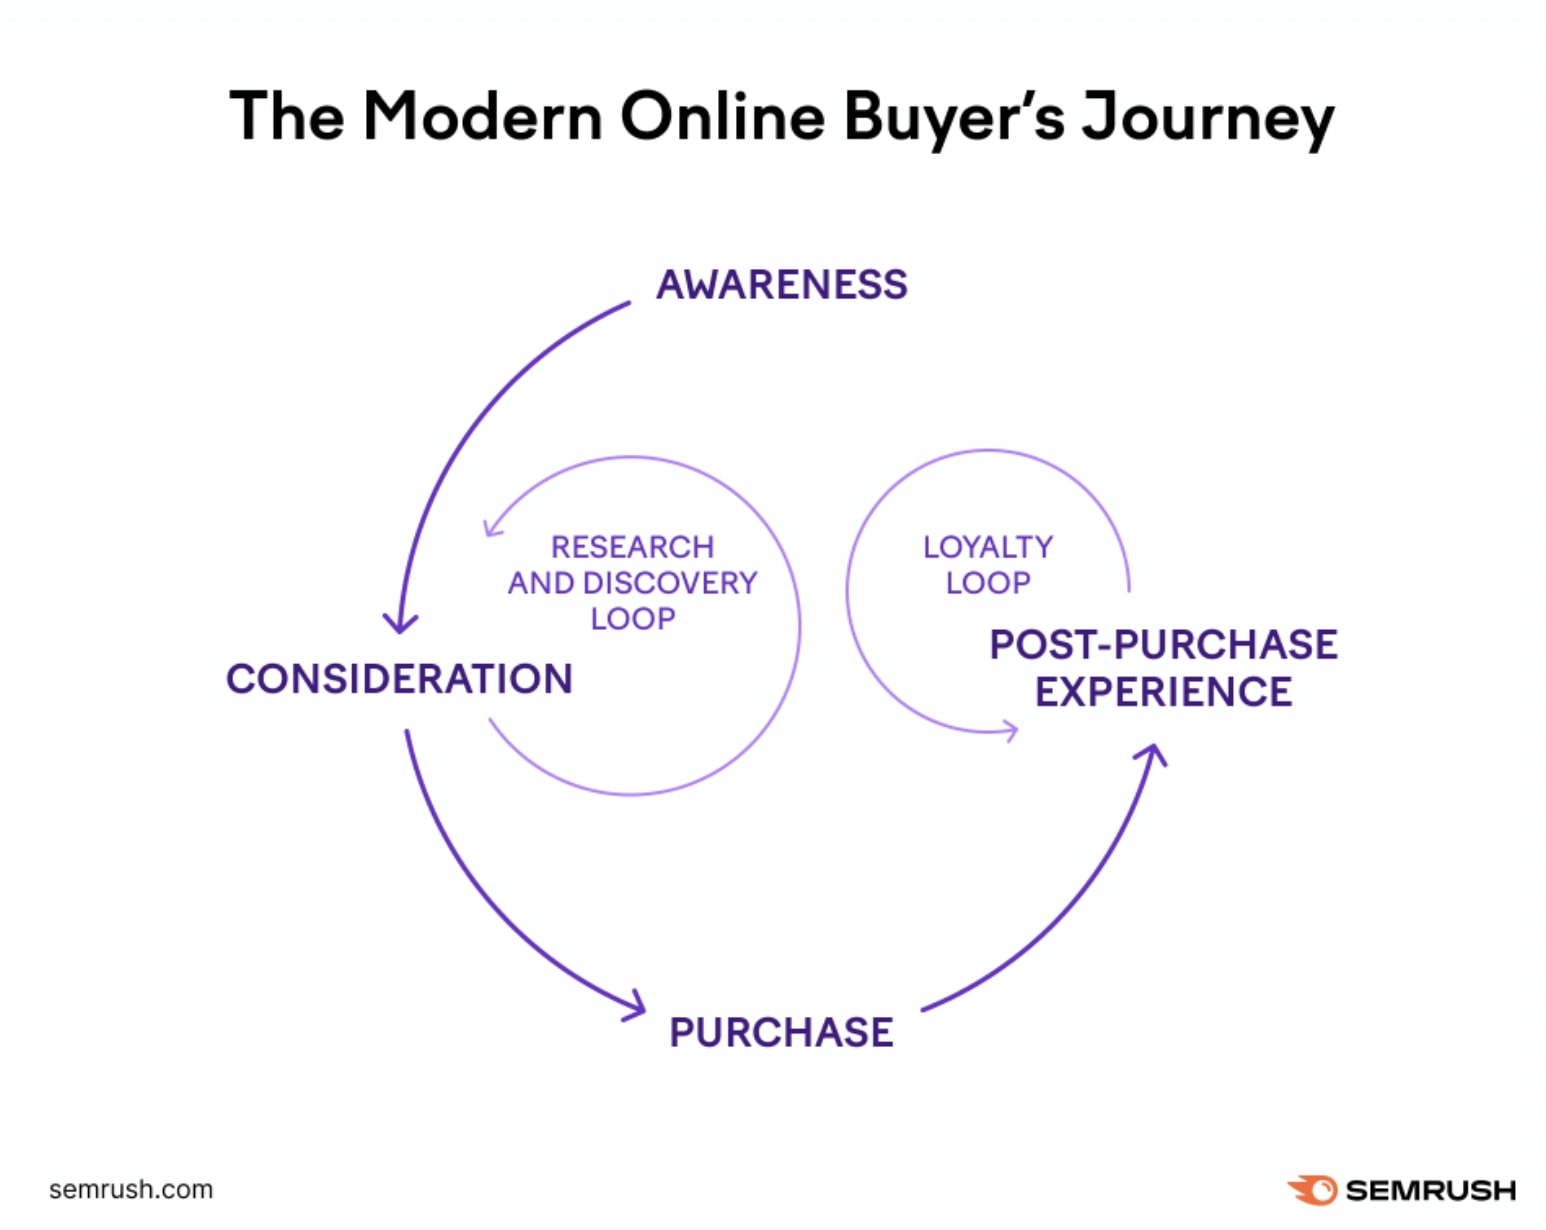 The modern online buyer's journey